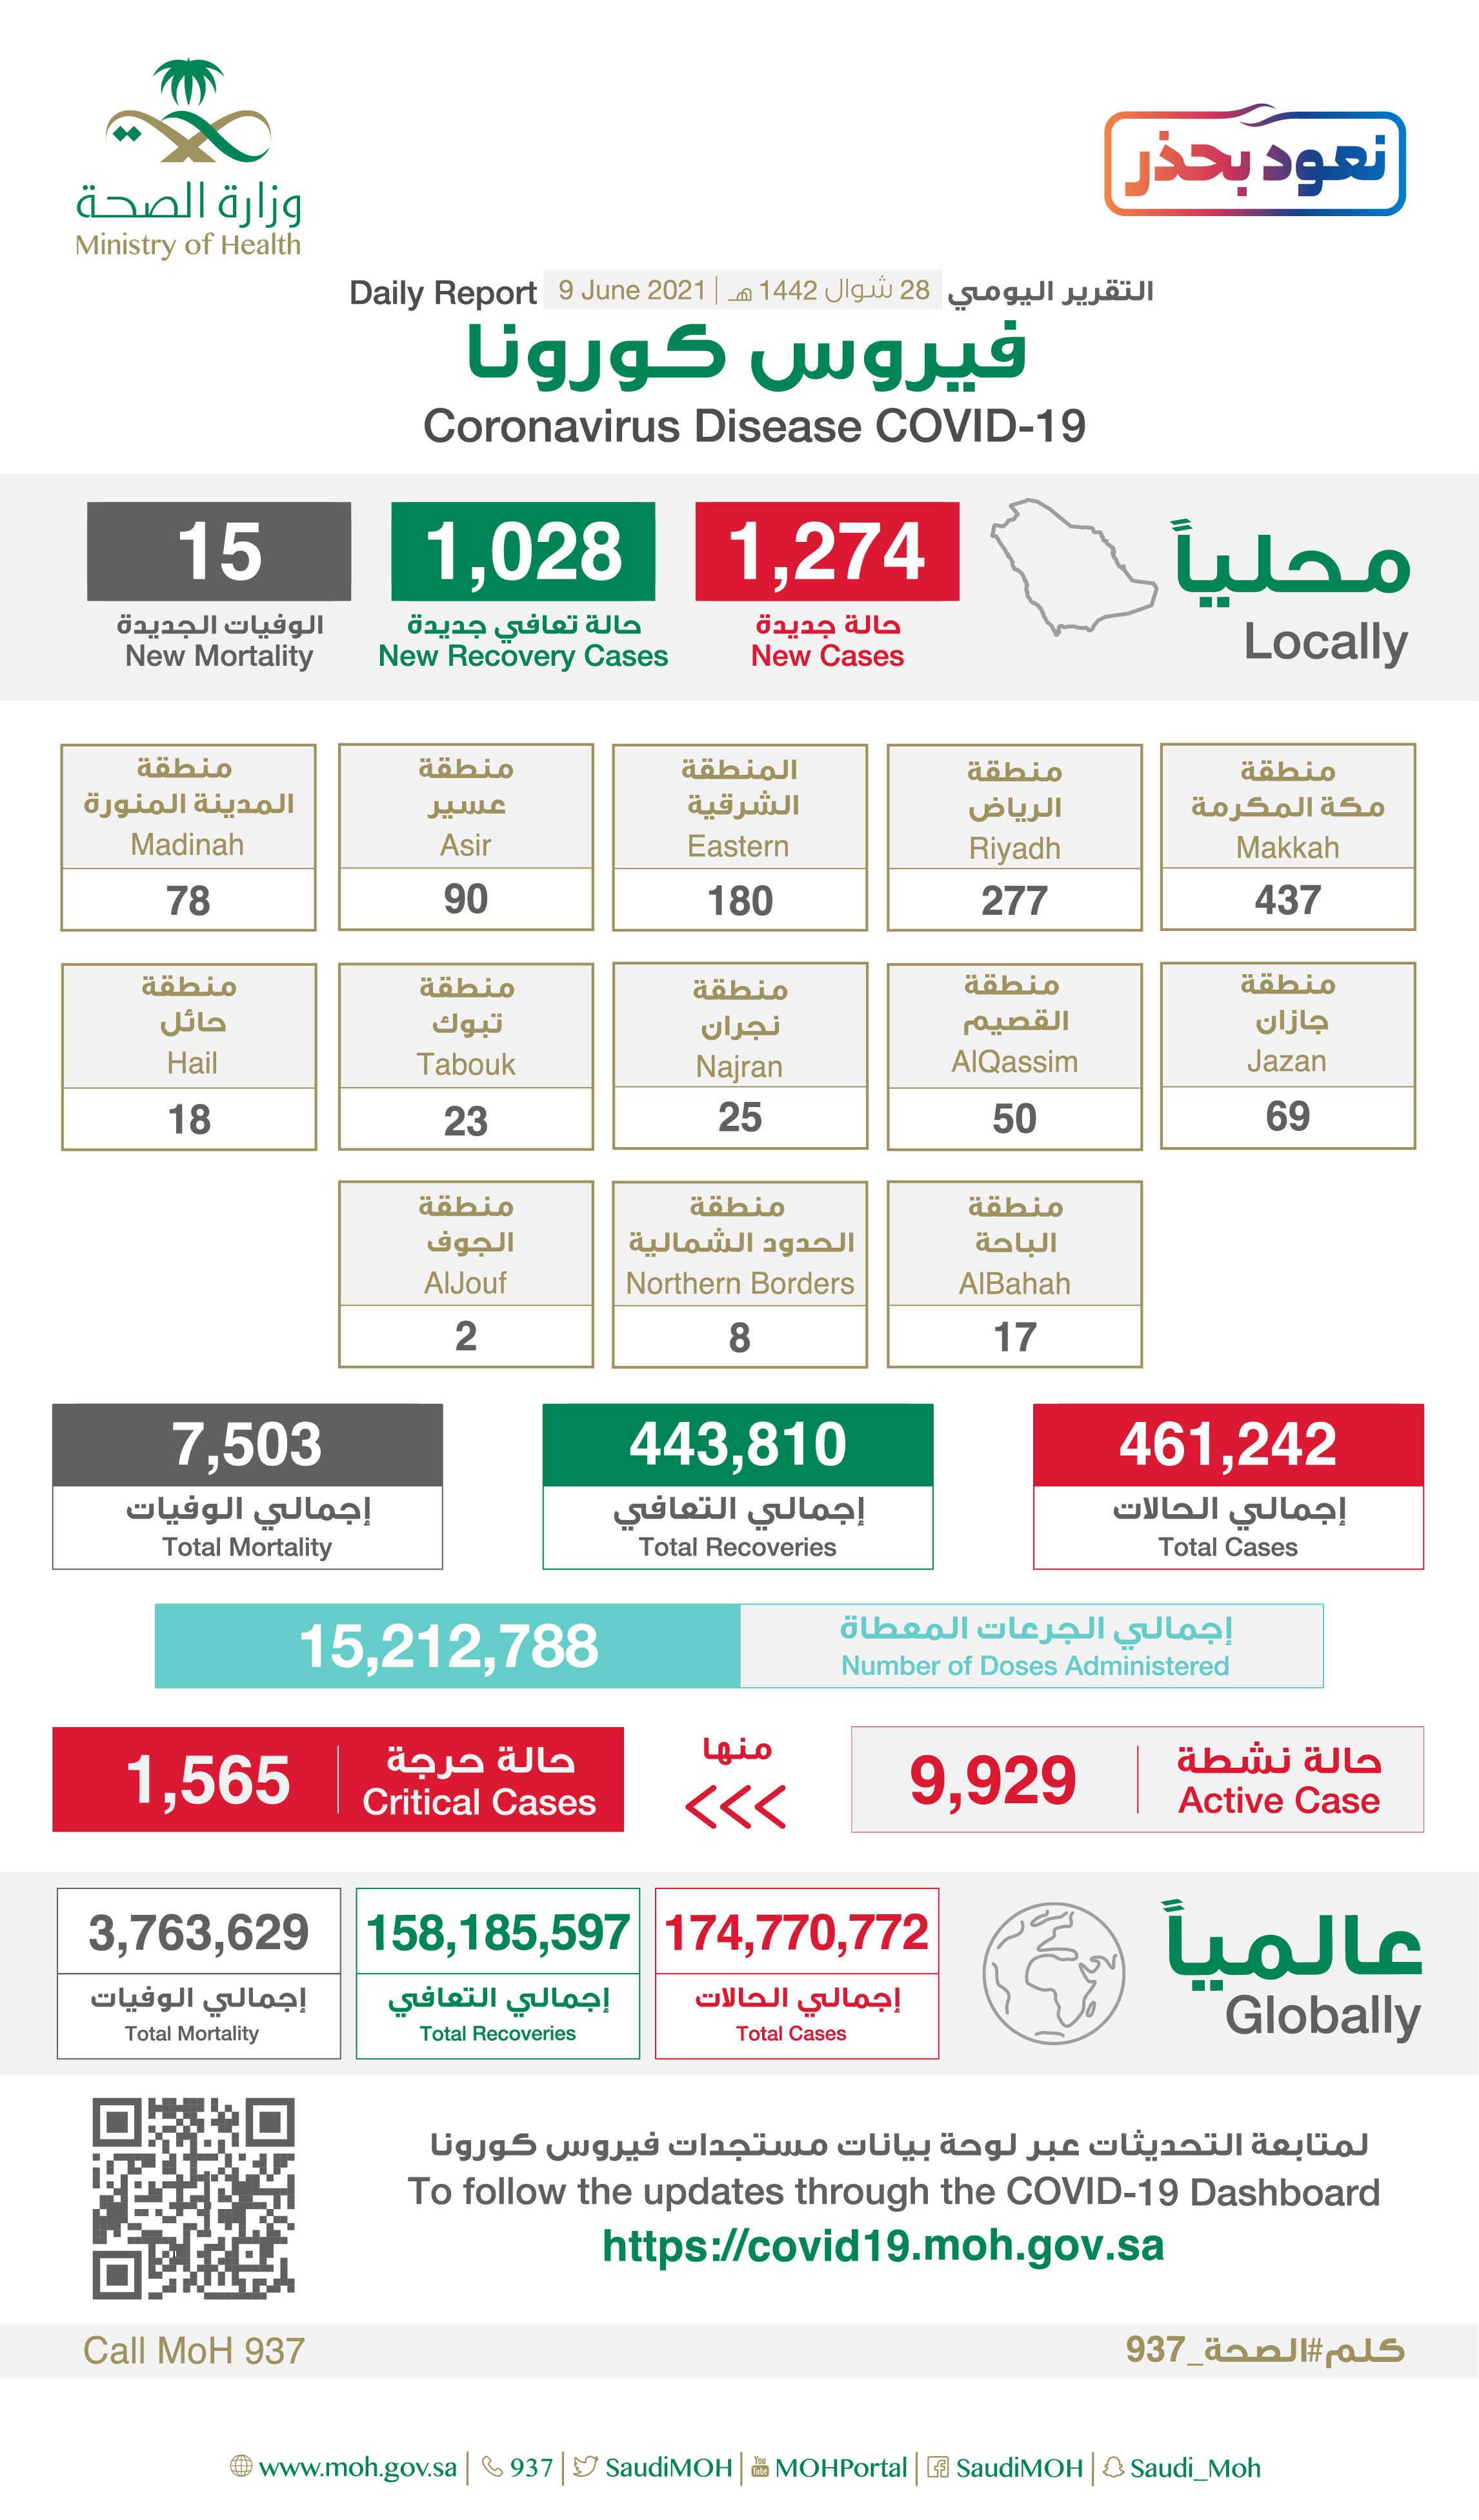 Saudi Arabia Coronavirus : Total Cases :461,242 , New Cases : 1,274 , Cured : 443,810, Deaths: 7,503, Active Cases : 9,929